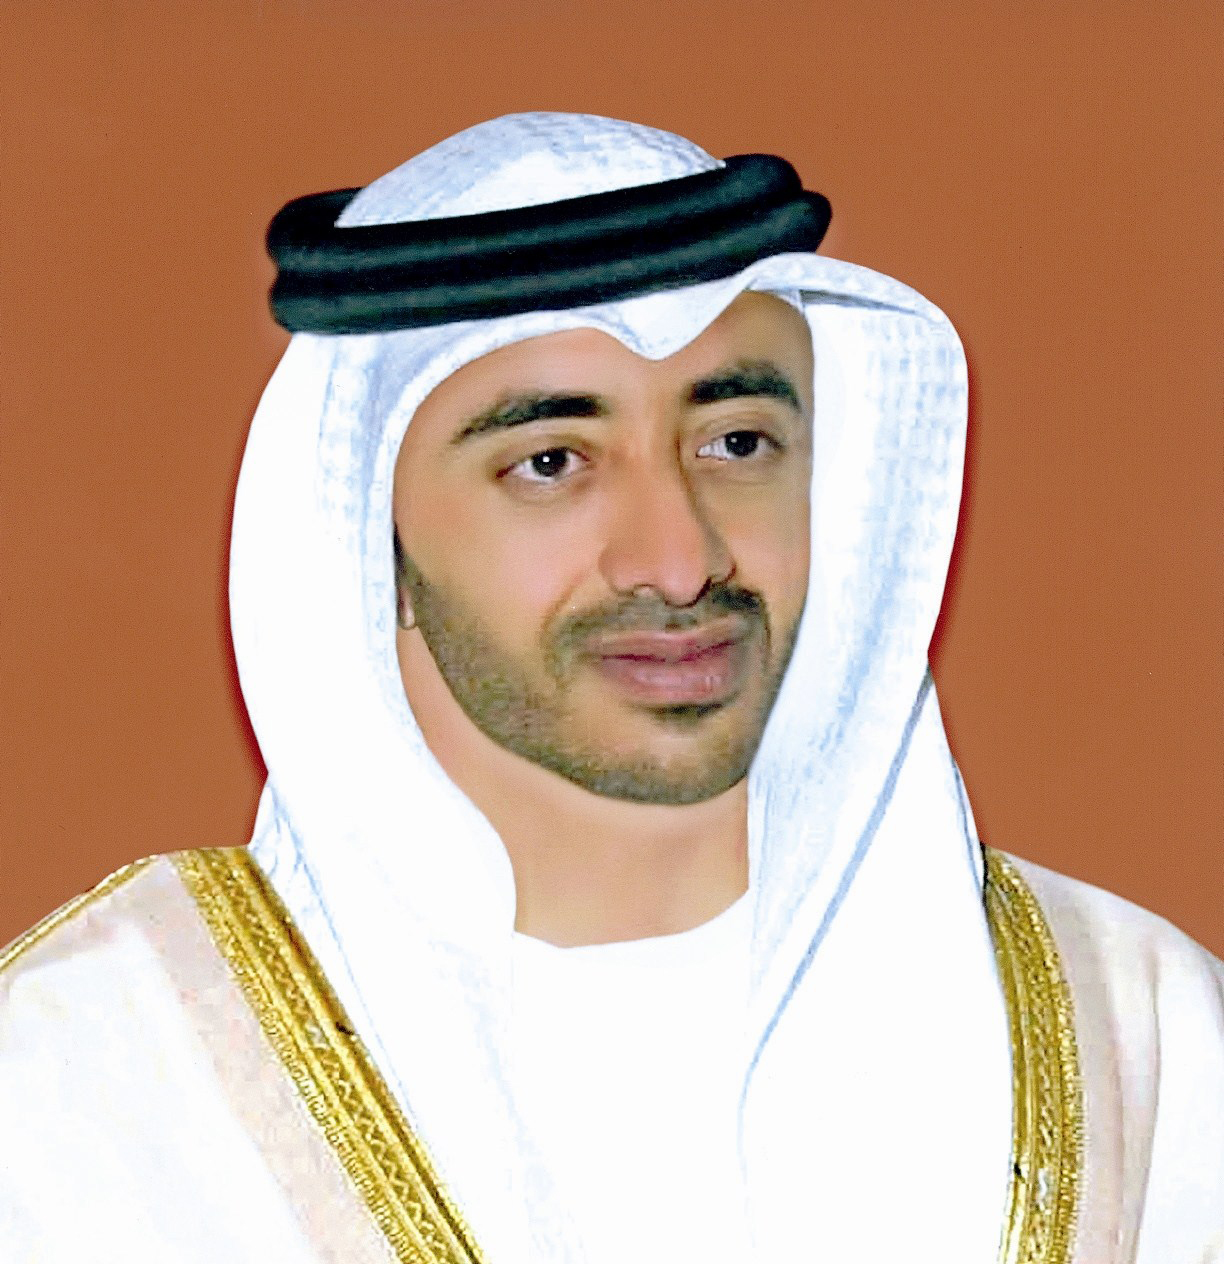 UAE Foreign Minister Sheikh Abdullah bin Zayed Al-Nahyan